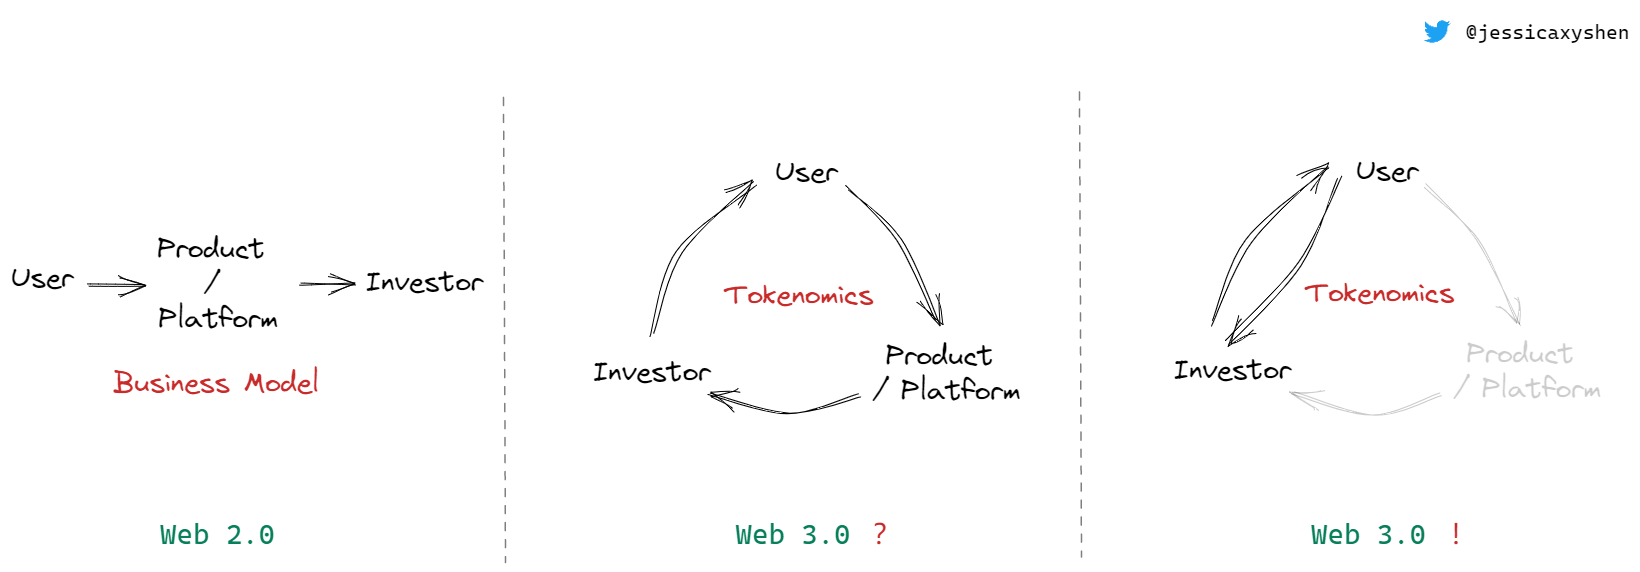 Web2.0 vs Web3.0 Models (same as above)